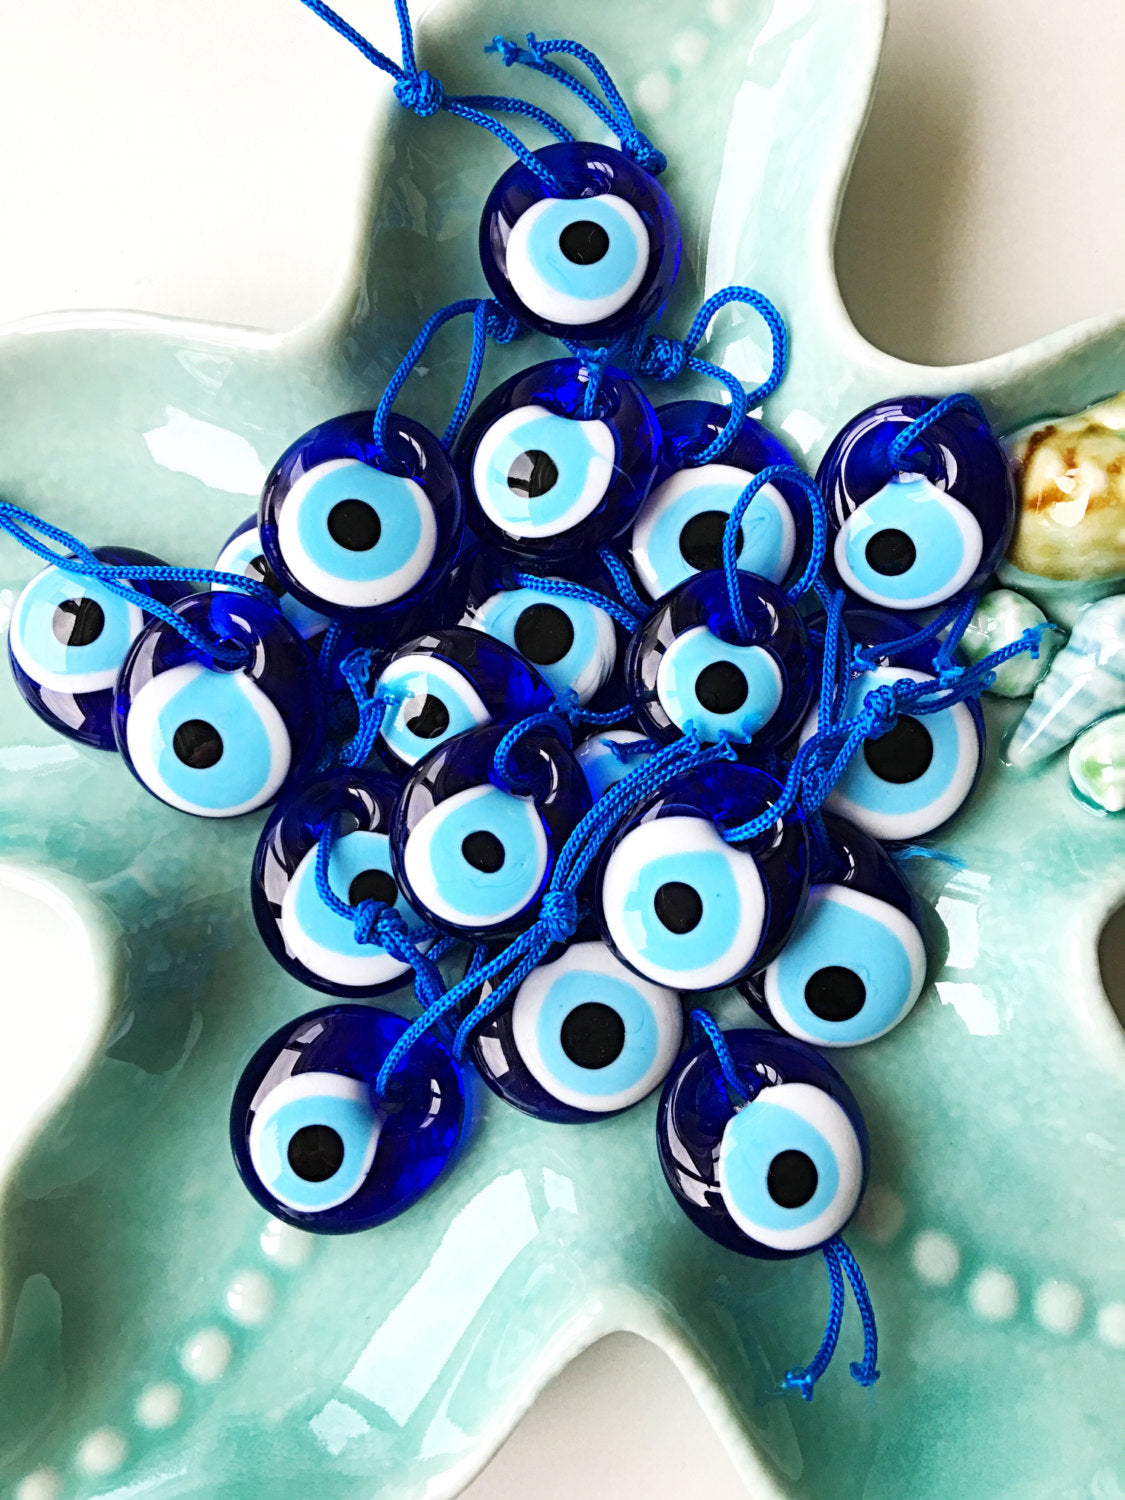 20 pcs nazar boncuk, evil eye beads, wedding favors for guests